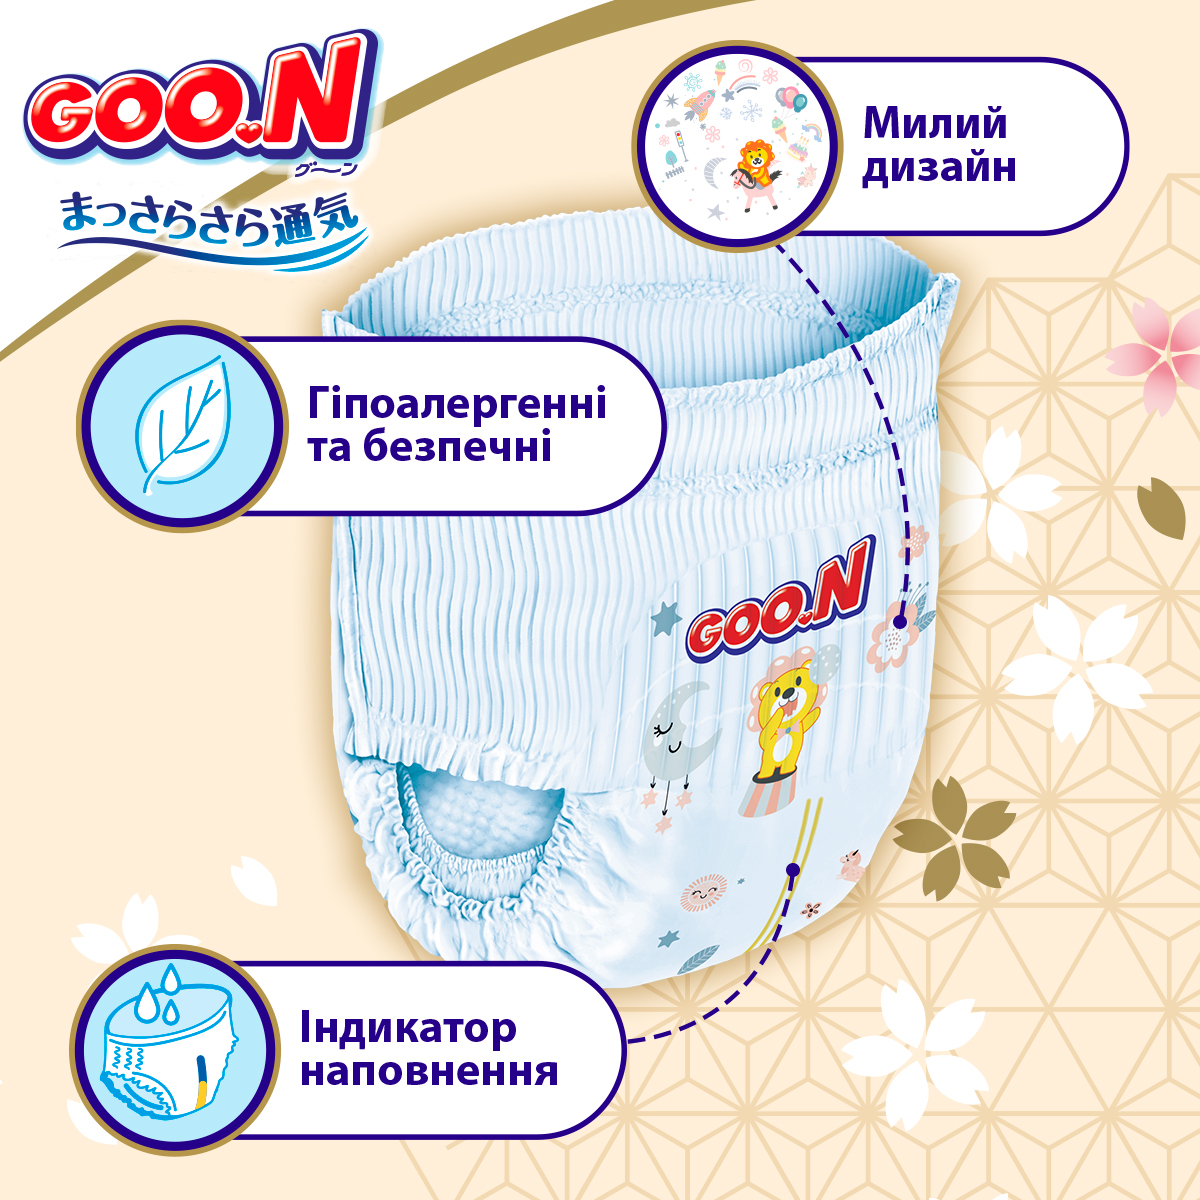 Трусики-подгузники Goo.N Premium Soft размер 7(3XL) 18-30 кг доу-пак 44 шт. - фото 5